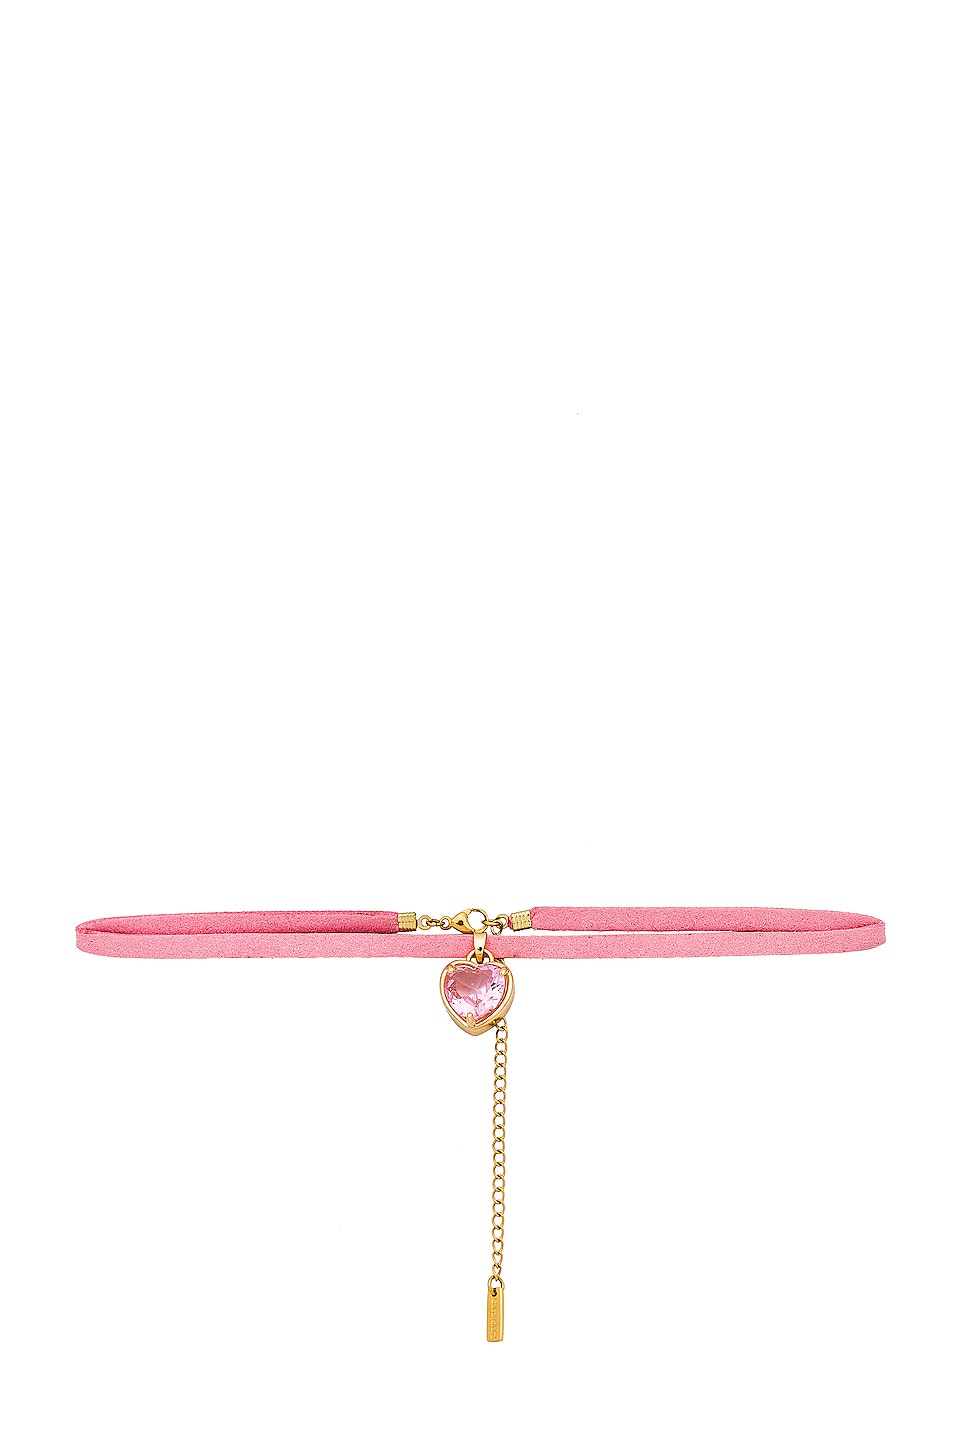 Casa Clara Love Necklace in Dancer Pink